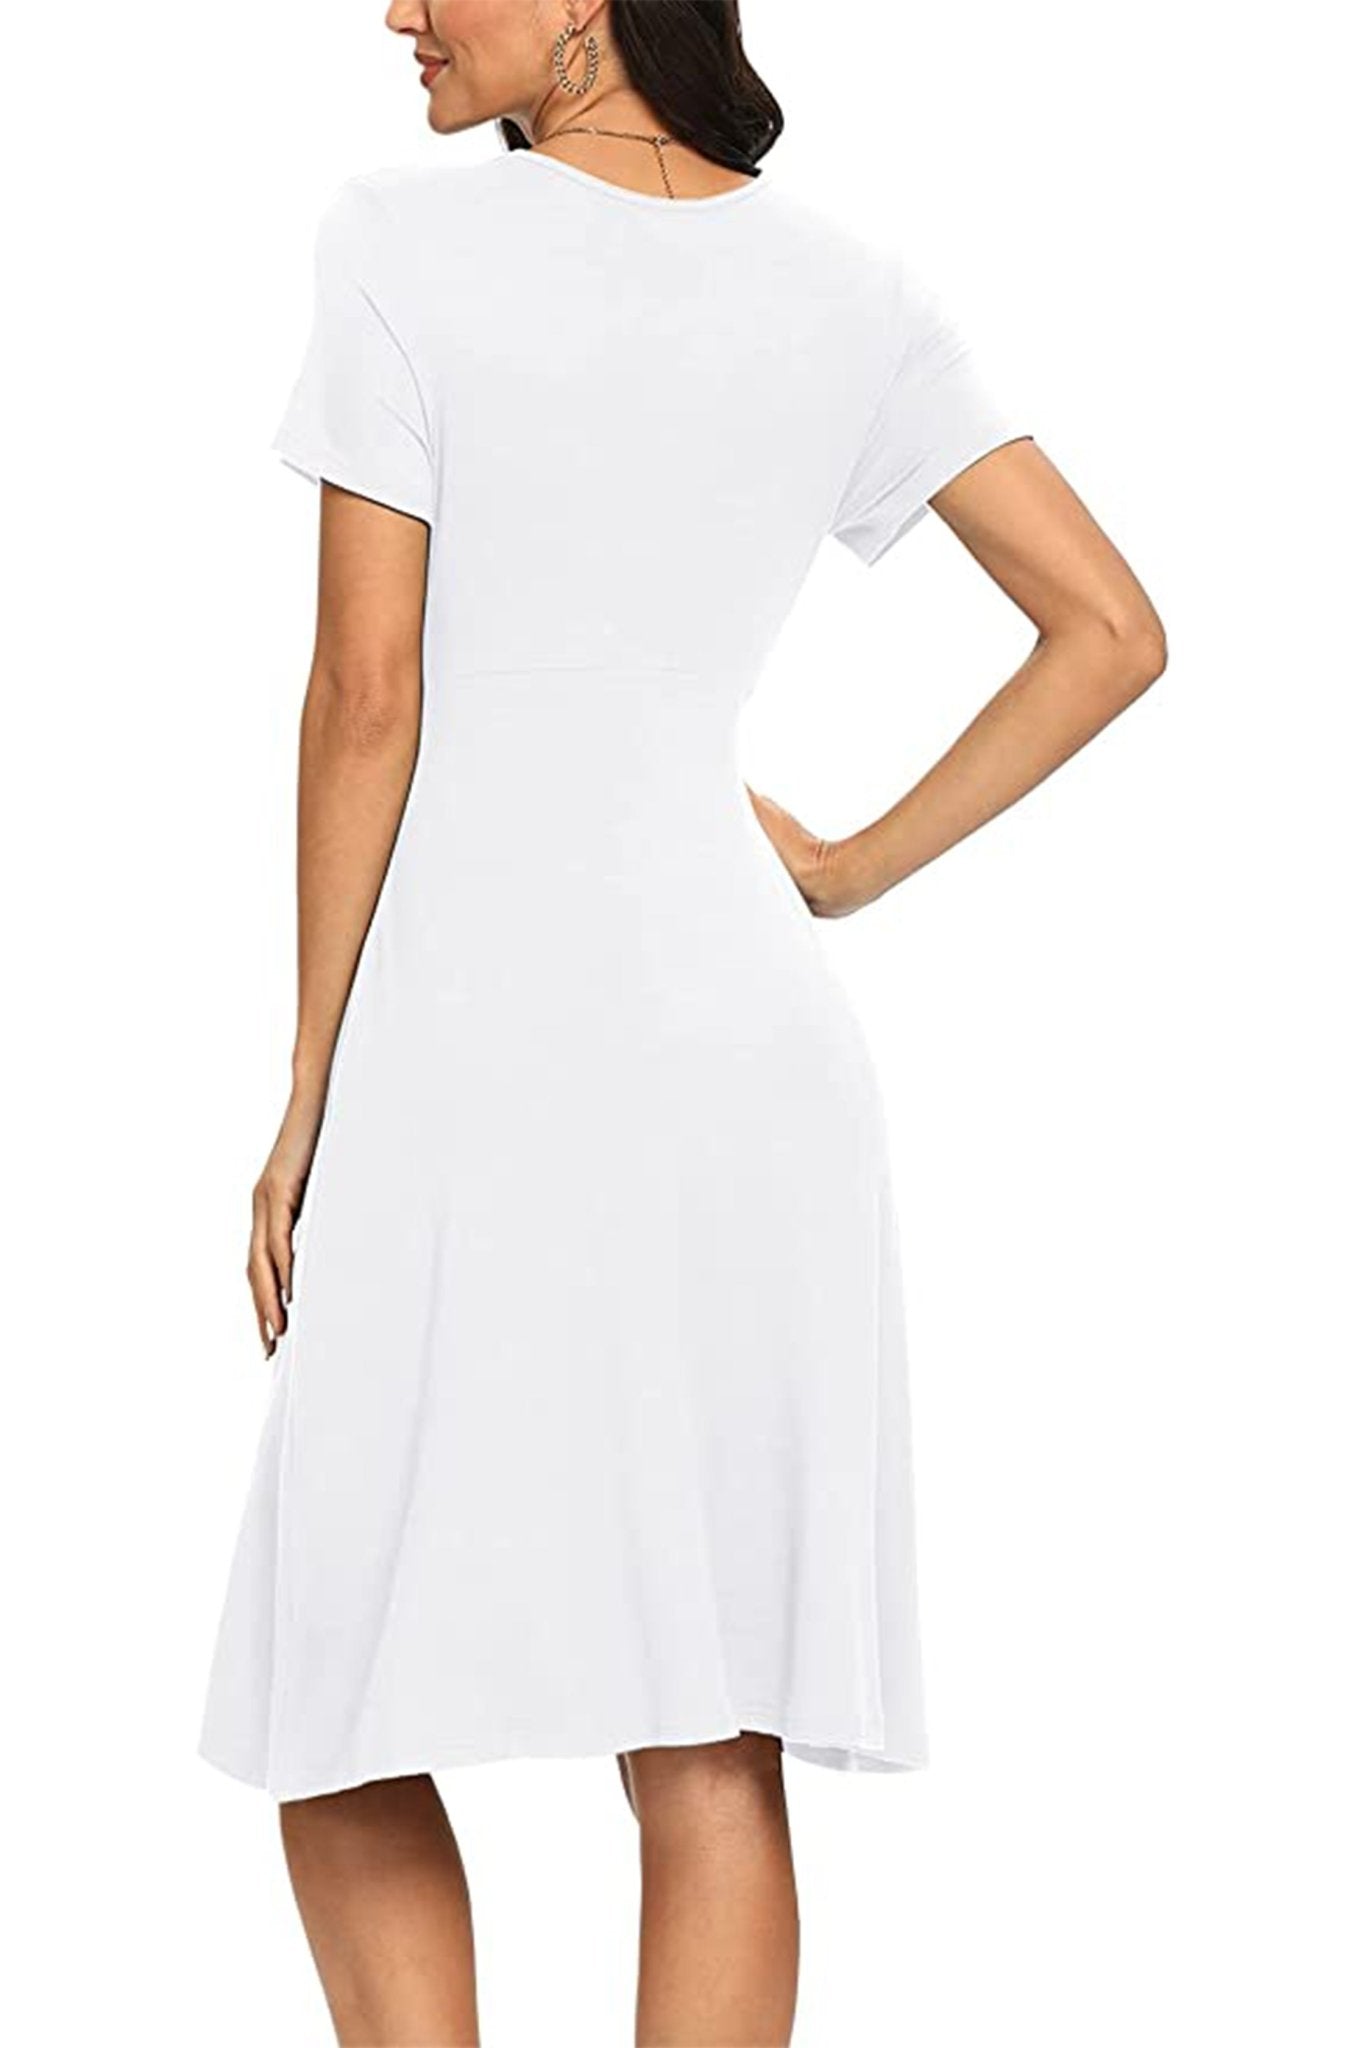 Casual Short Sleeve V-Neck Dress with Pockets, Summer Short Party Dress - POSESHE